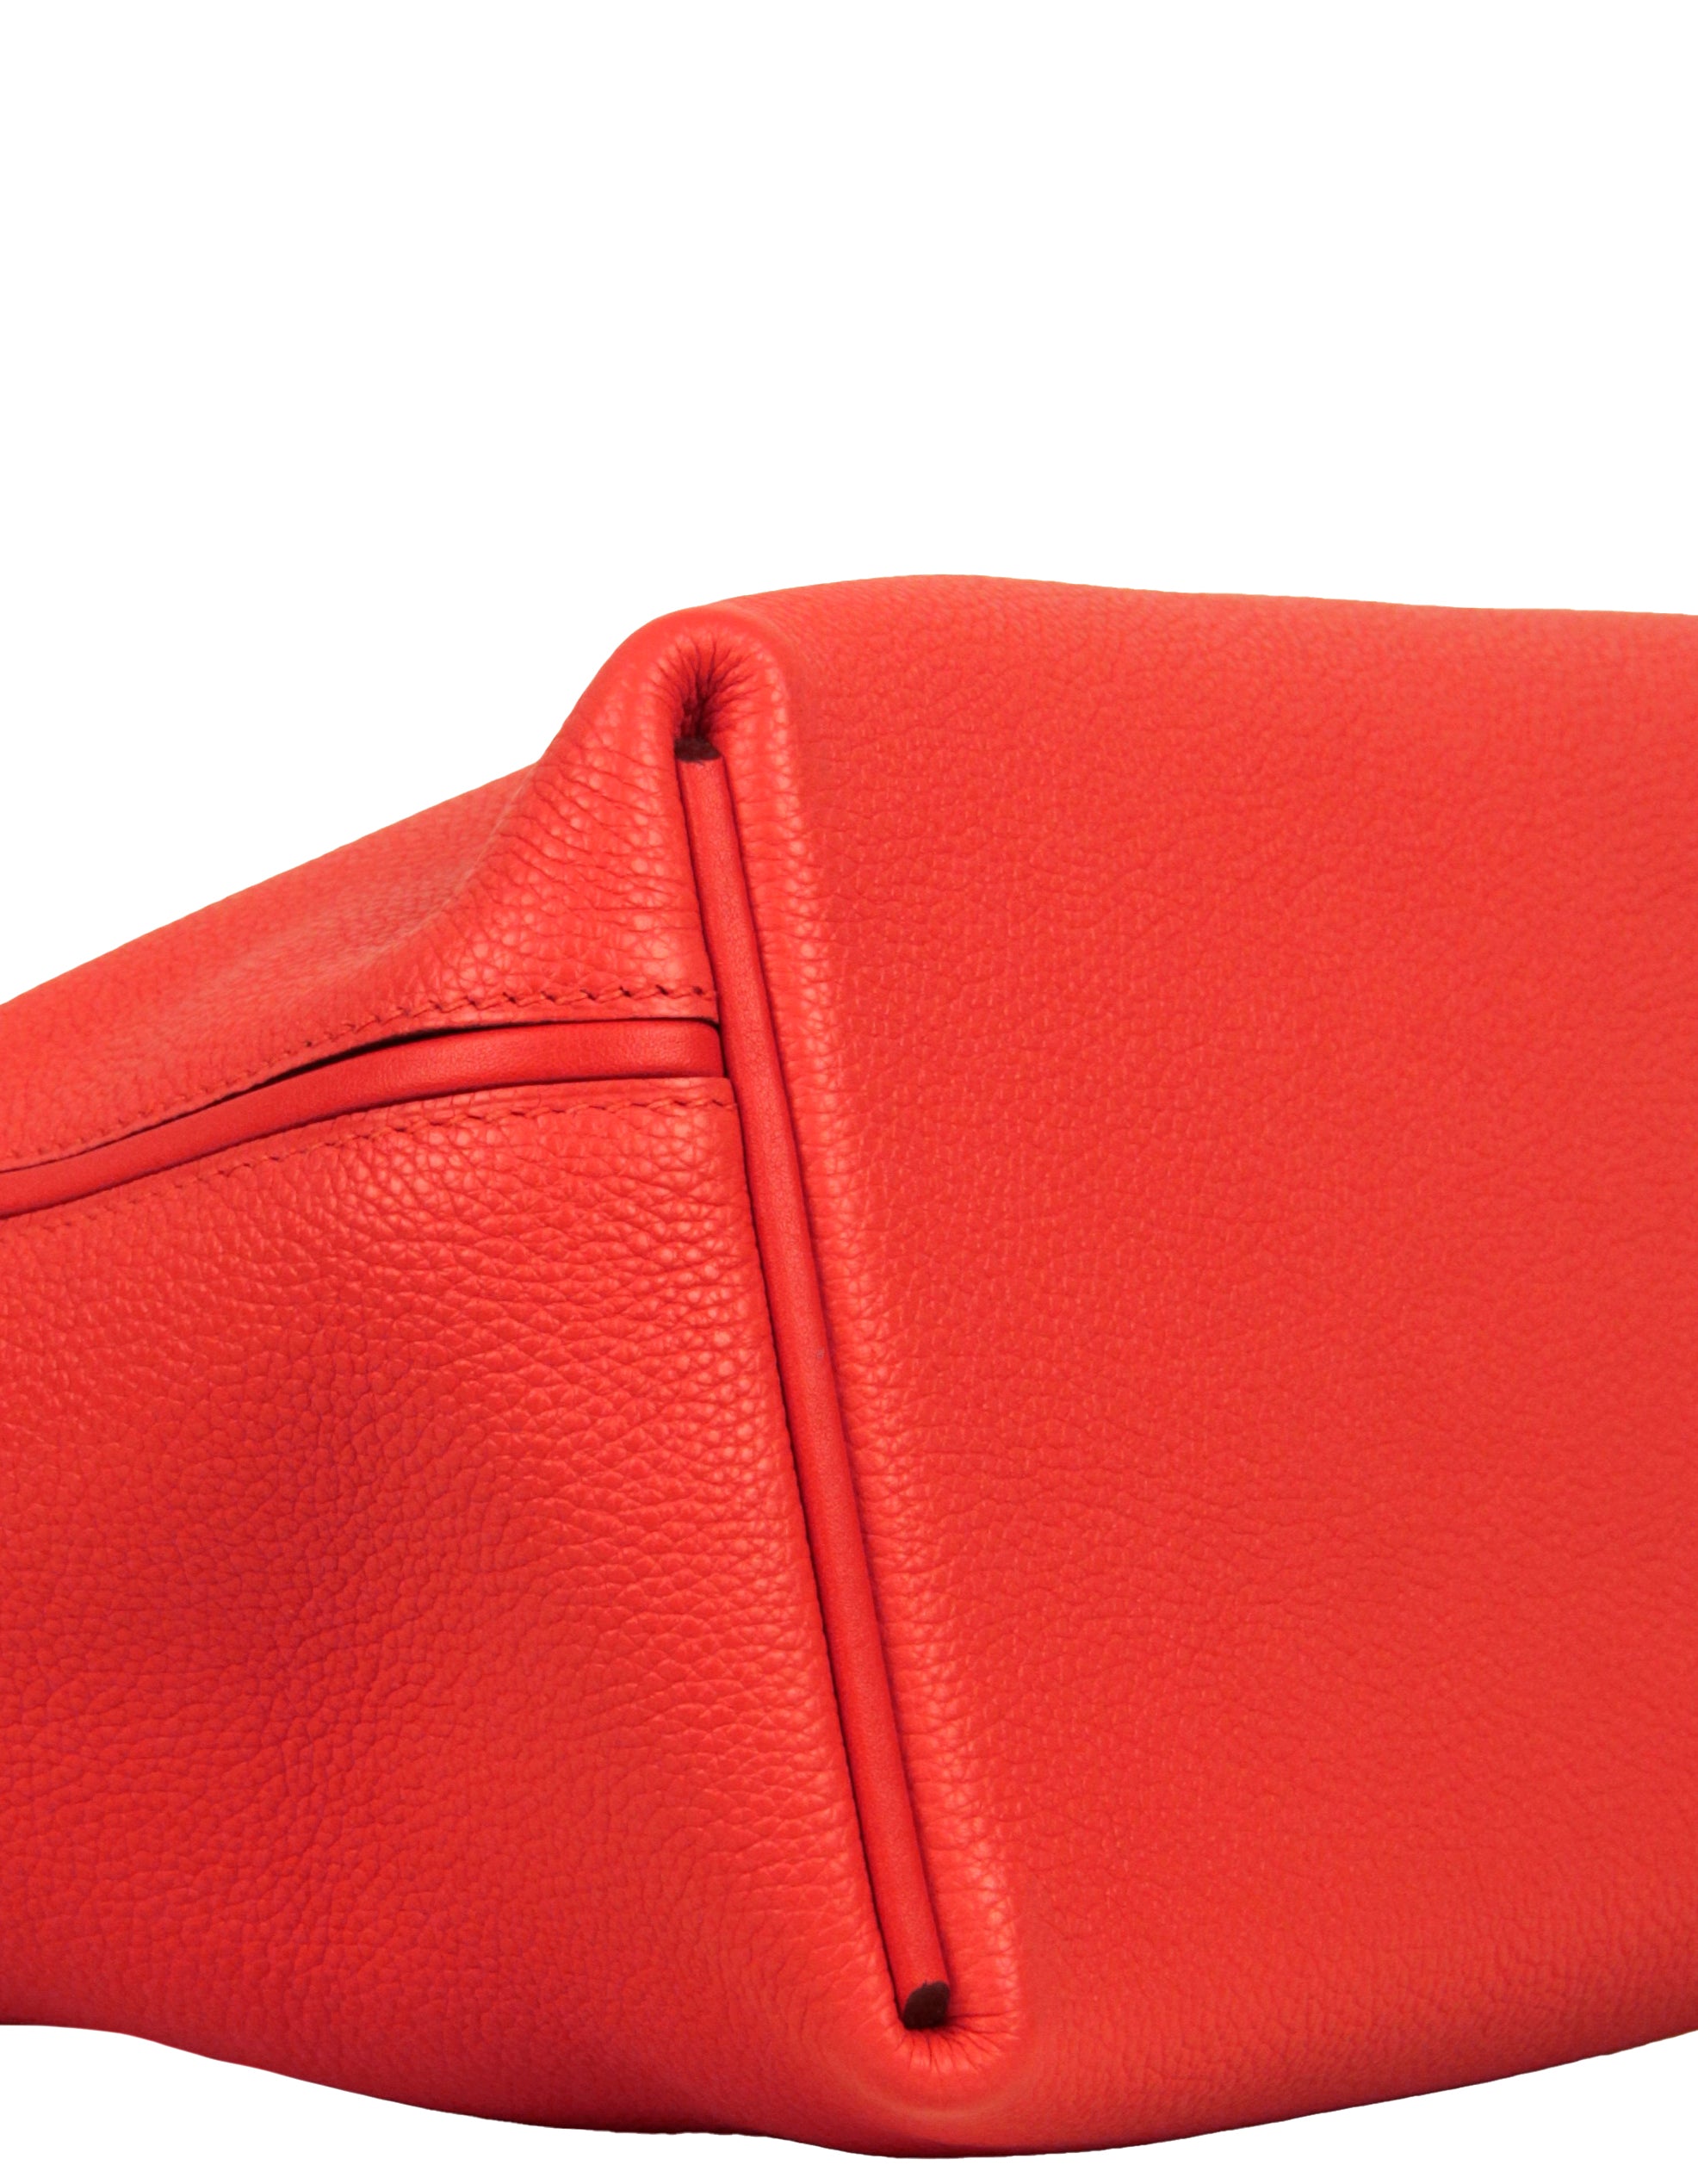 Hermes Togo/Swift Leather Capucine 29cm 24/24 Bag